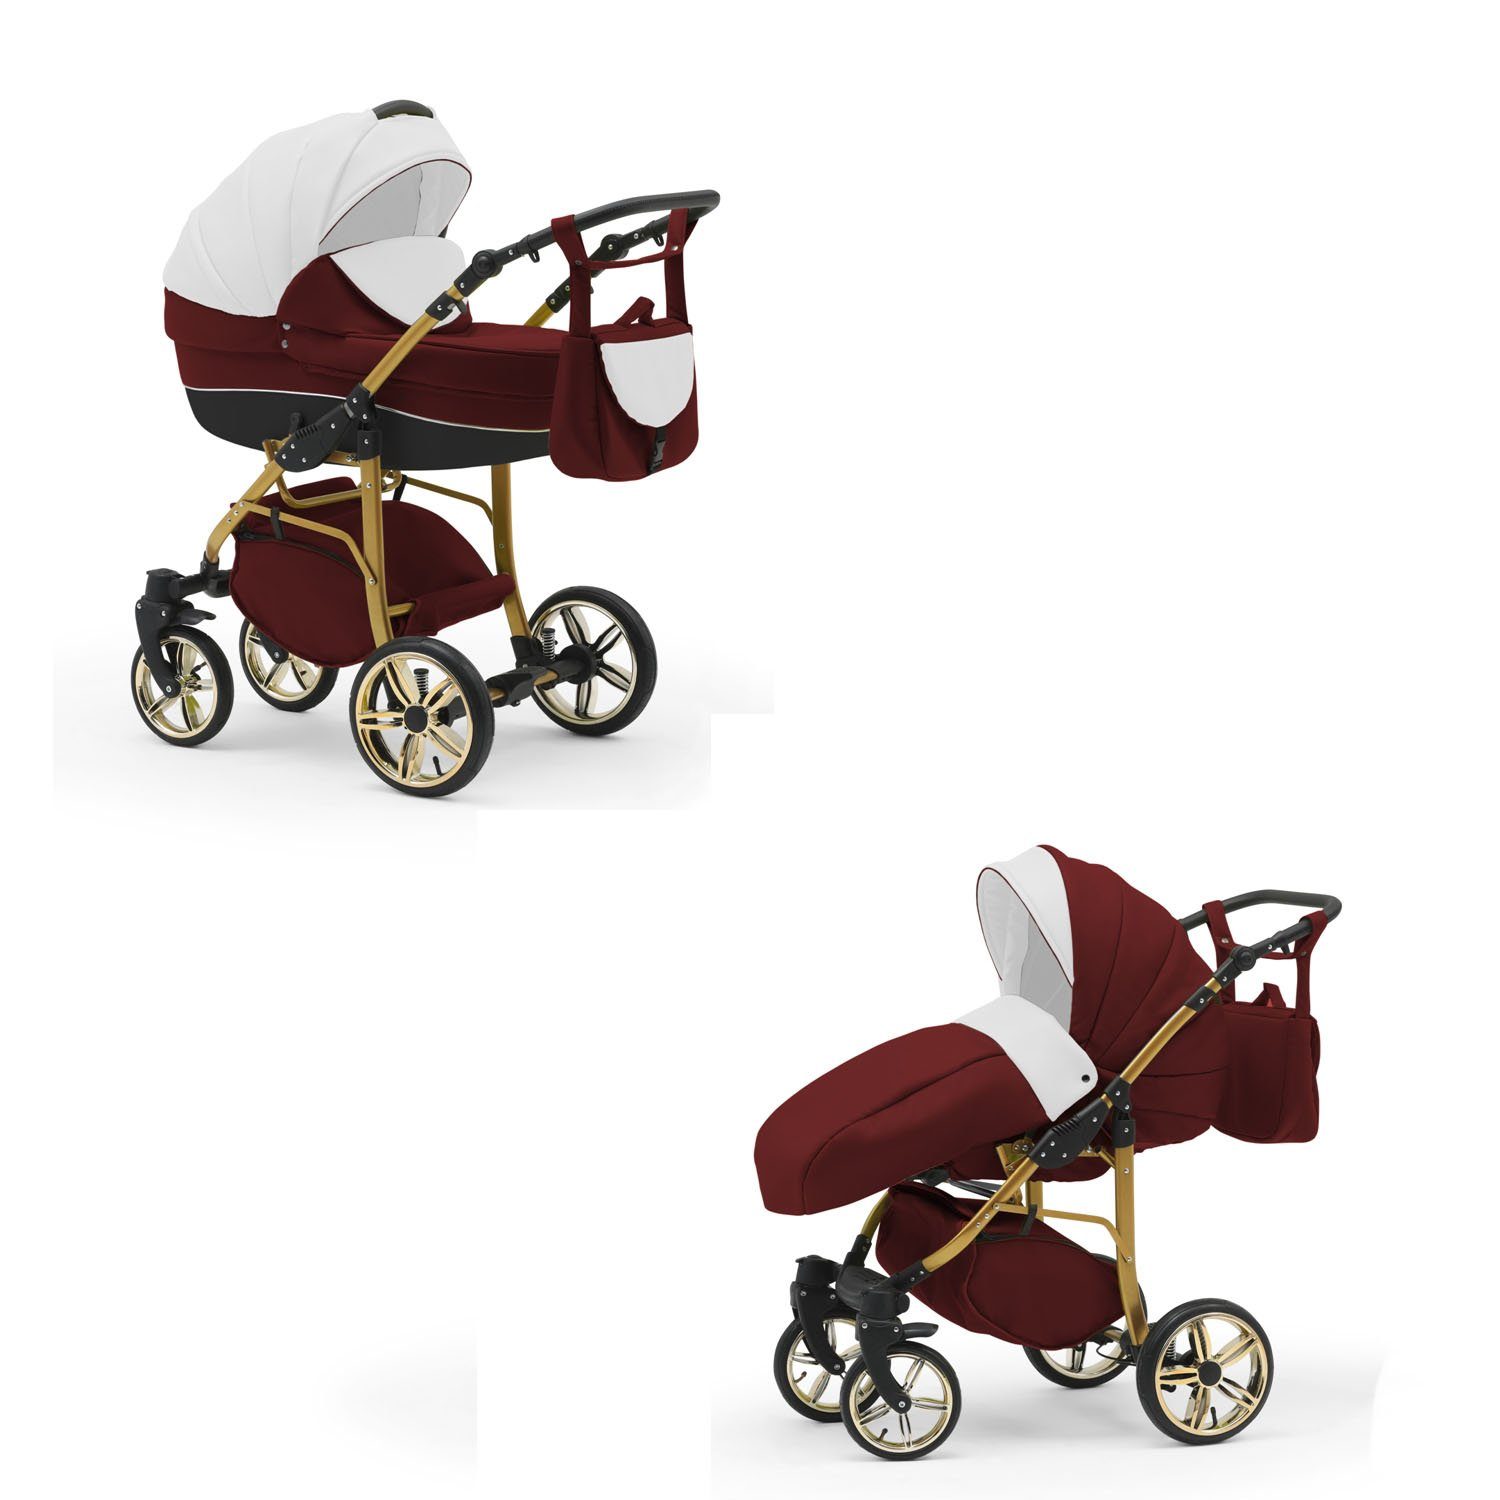 Cosmo 13 - 46 in - Kinderwagen-Set Weiß-Bordeaux-Schwarz babies-on-wheels 2 Gold 1 Farben in Teile Kombi-Kinderwagen